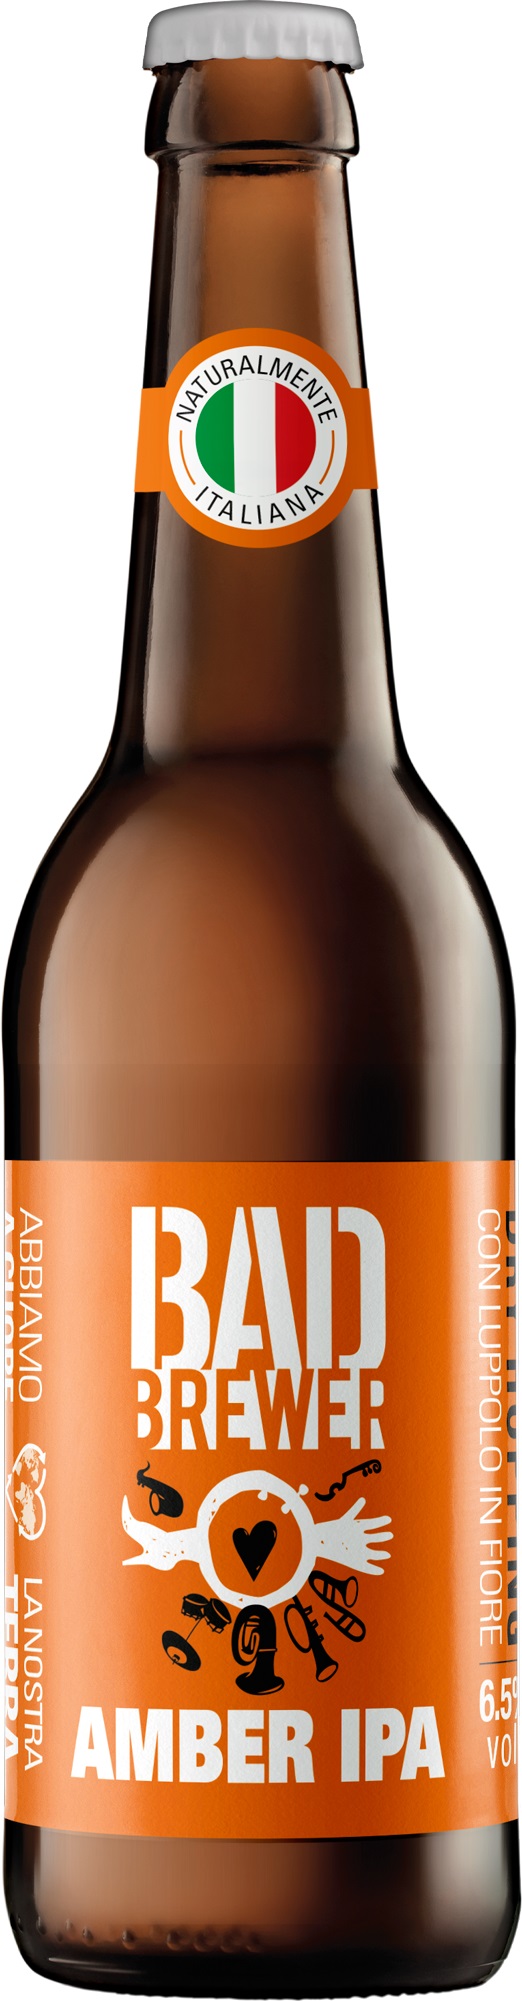 Bad Brewer Amber IPA